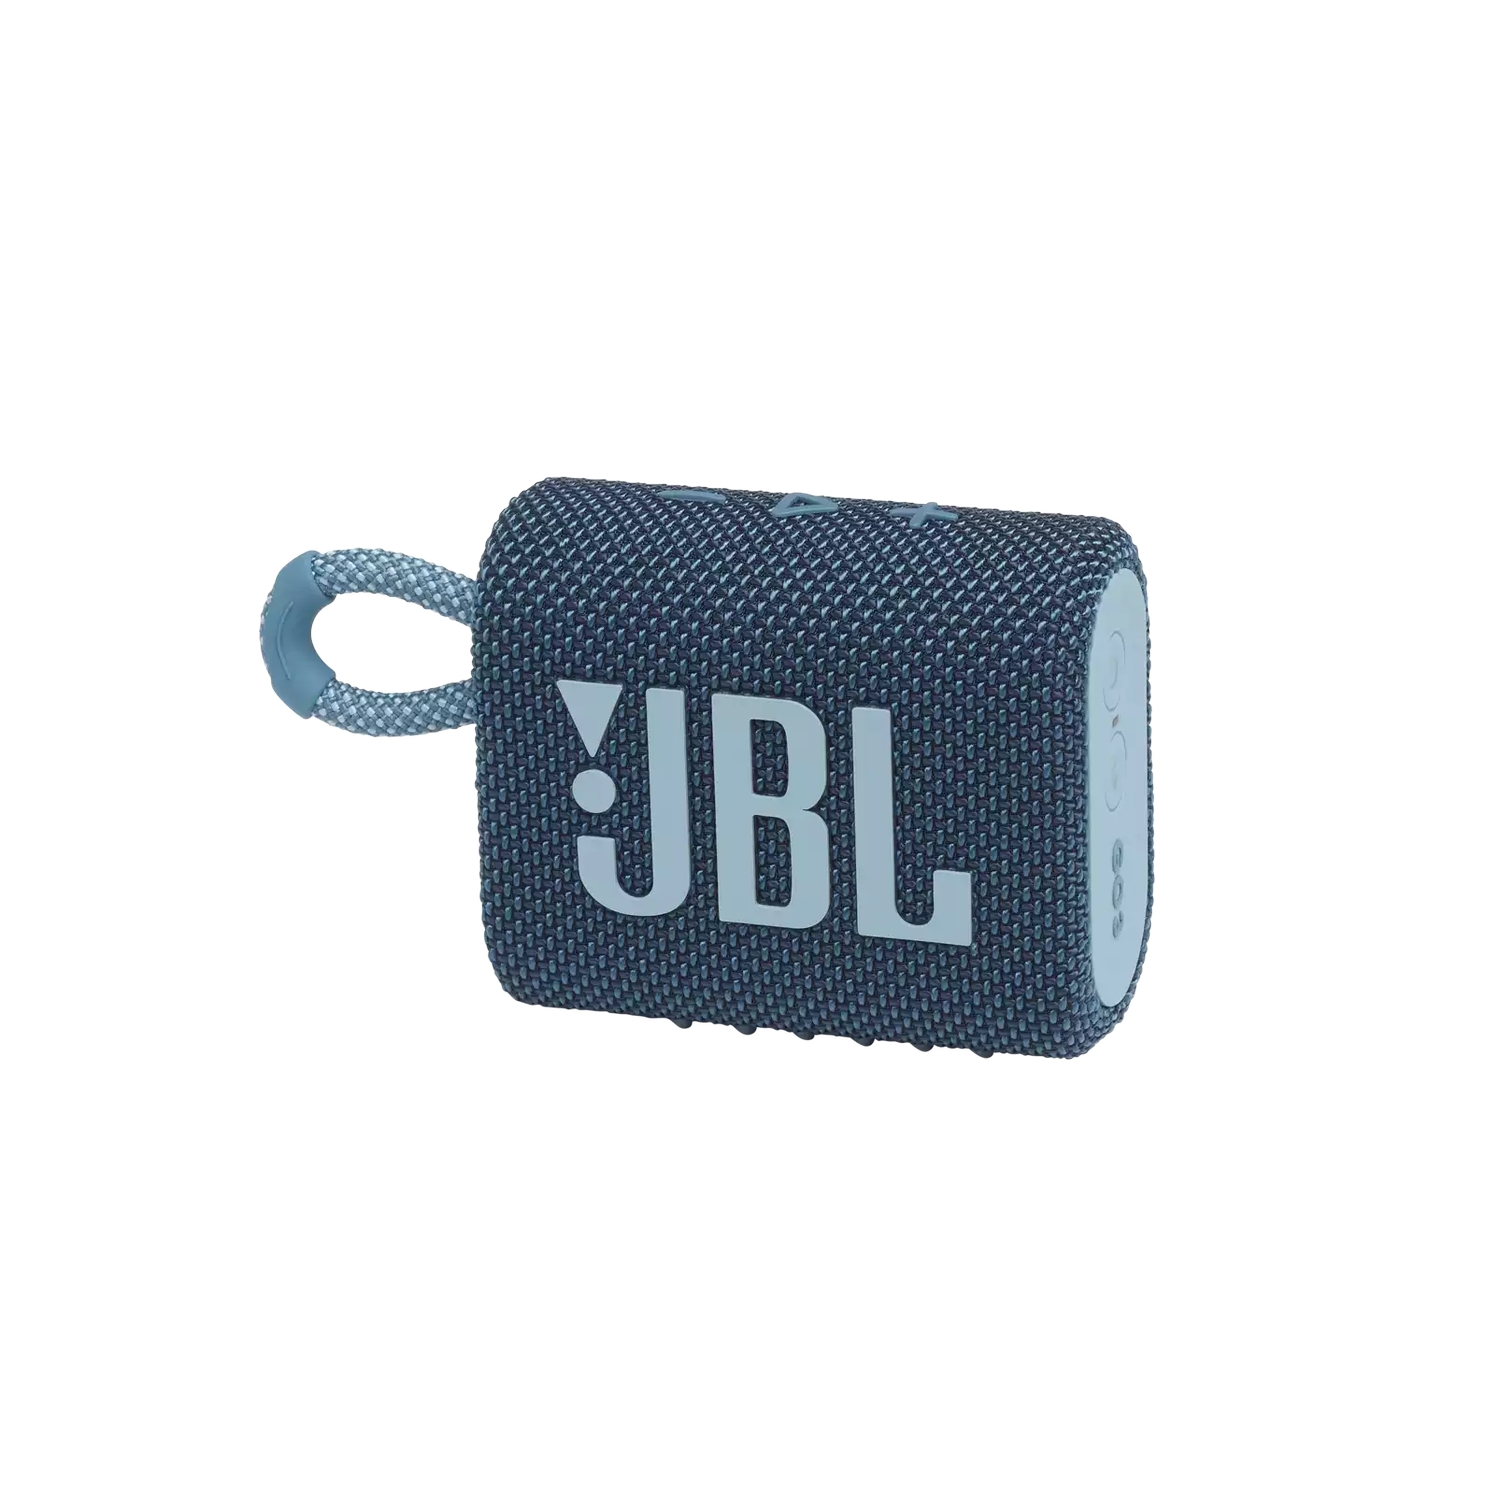 Портативная акустика JBL GO 3 Blue портативная акустика jbl go 2 синий